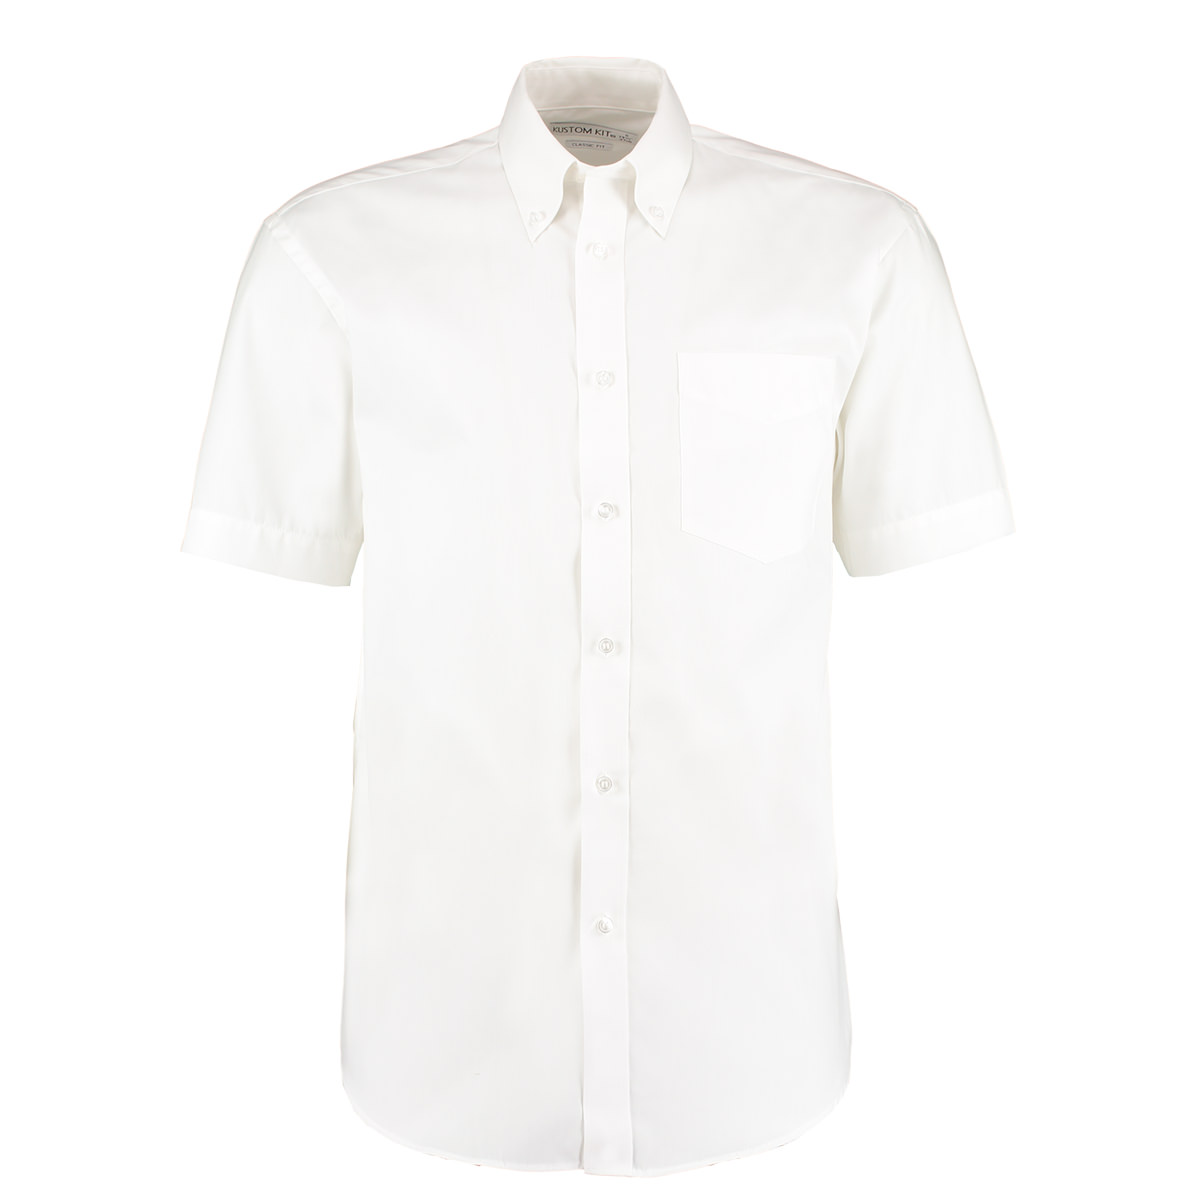 109 Men's Short Sleeve Corporate Oxford Shirt